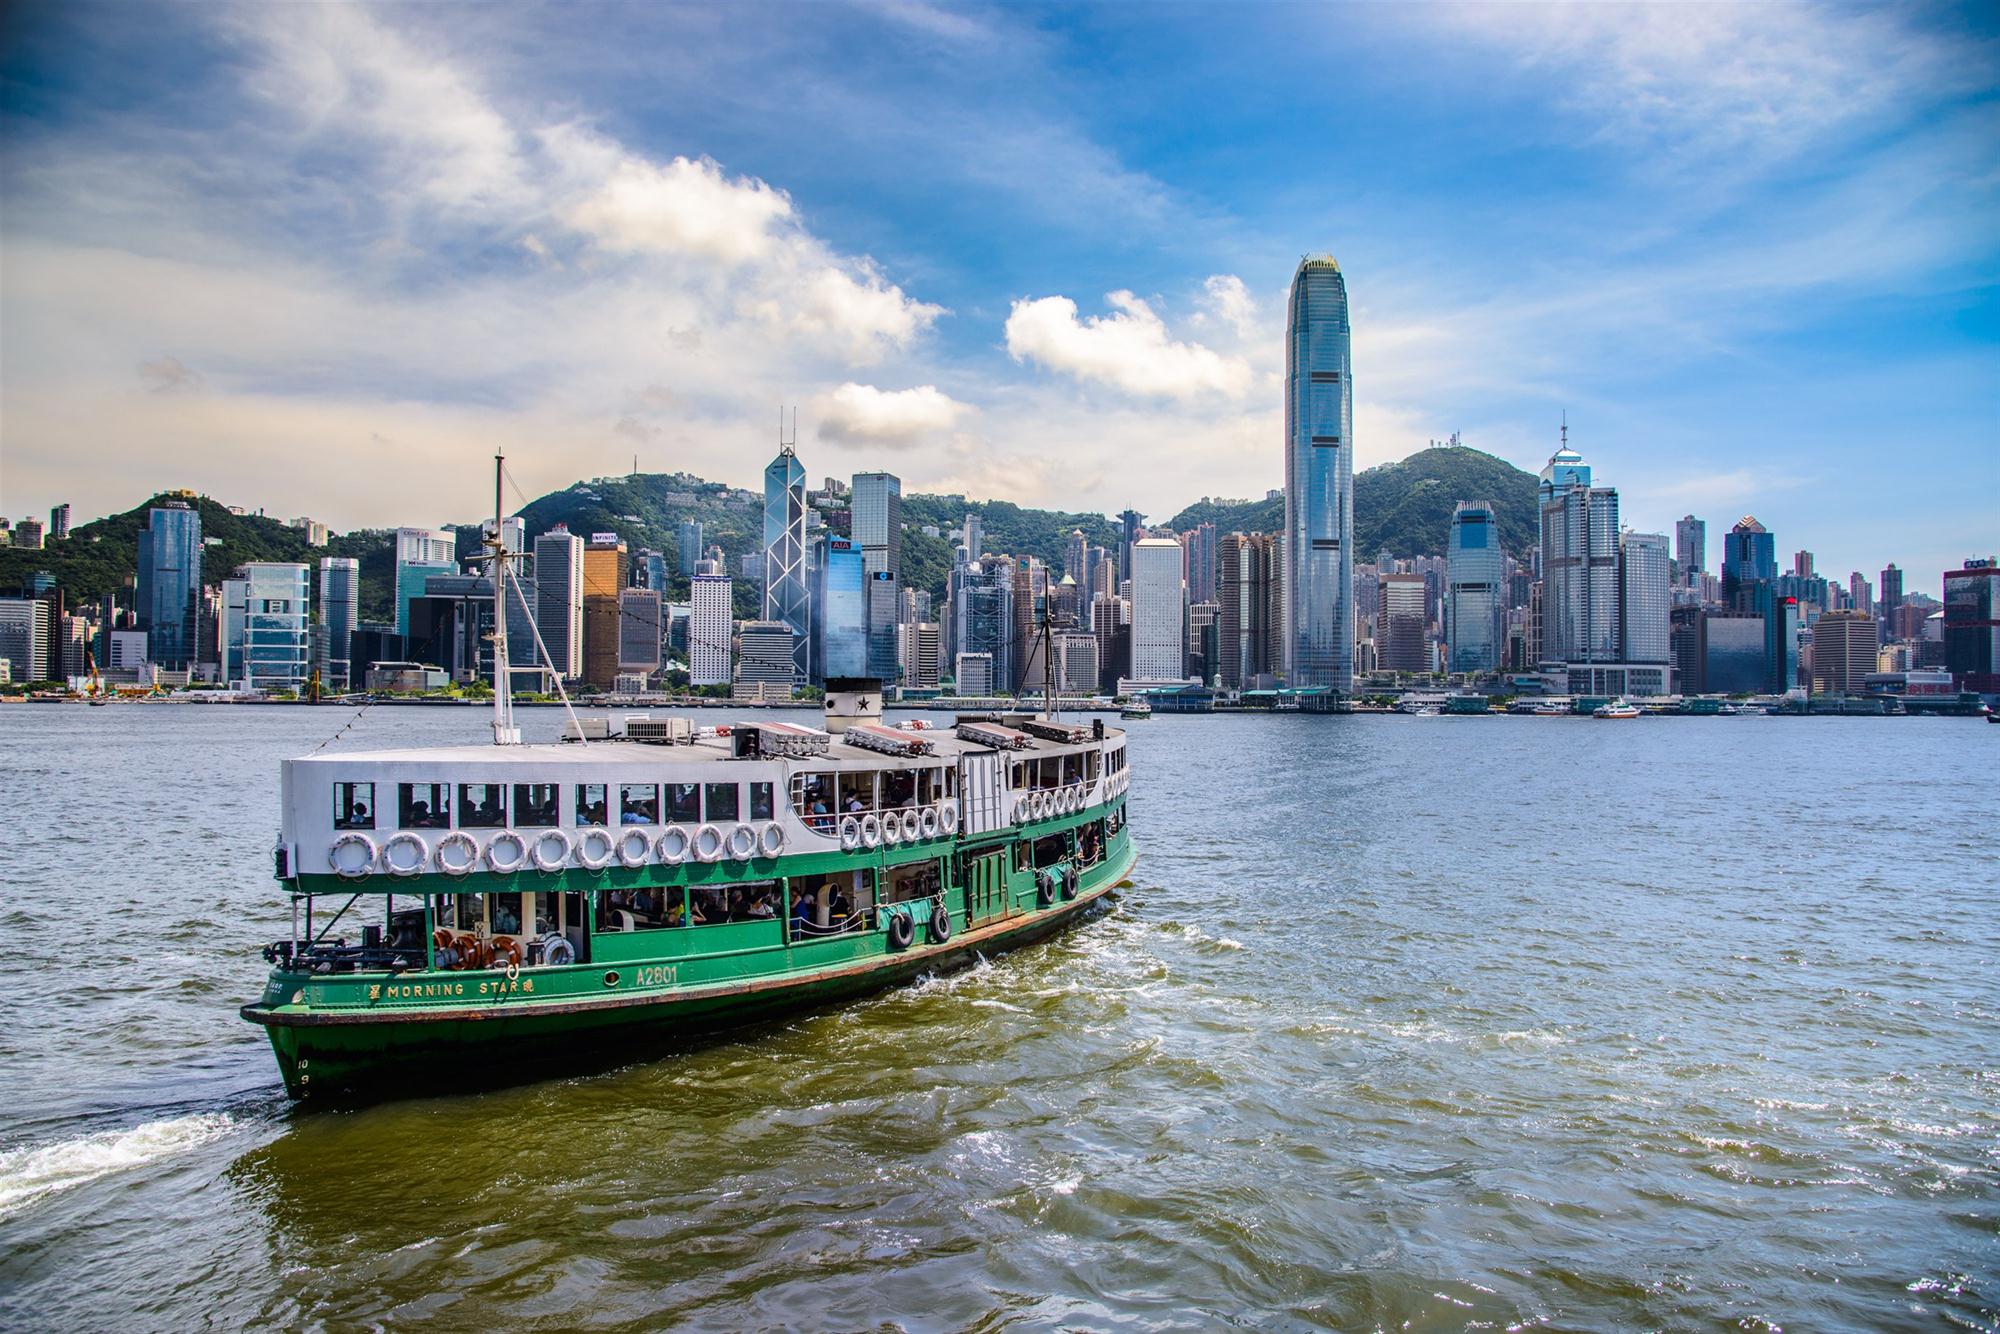 Self Photos / Files - Hong Kong Star Ferry HKTB